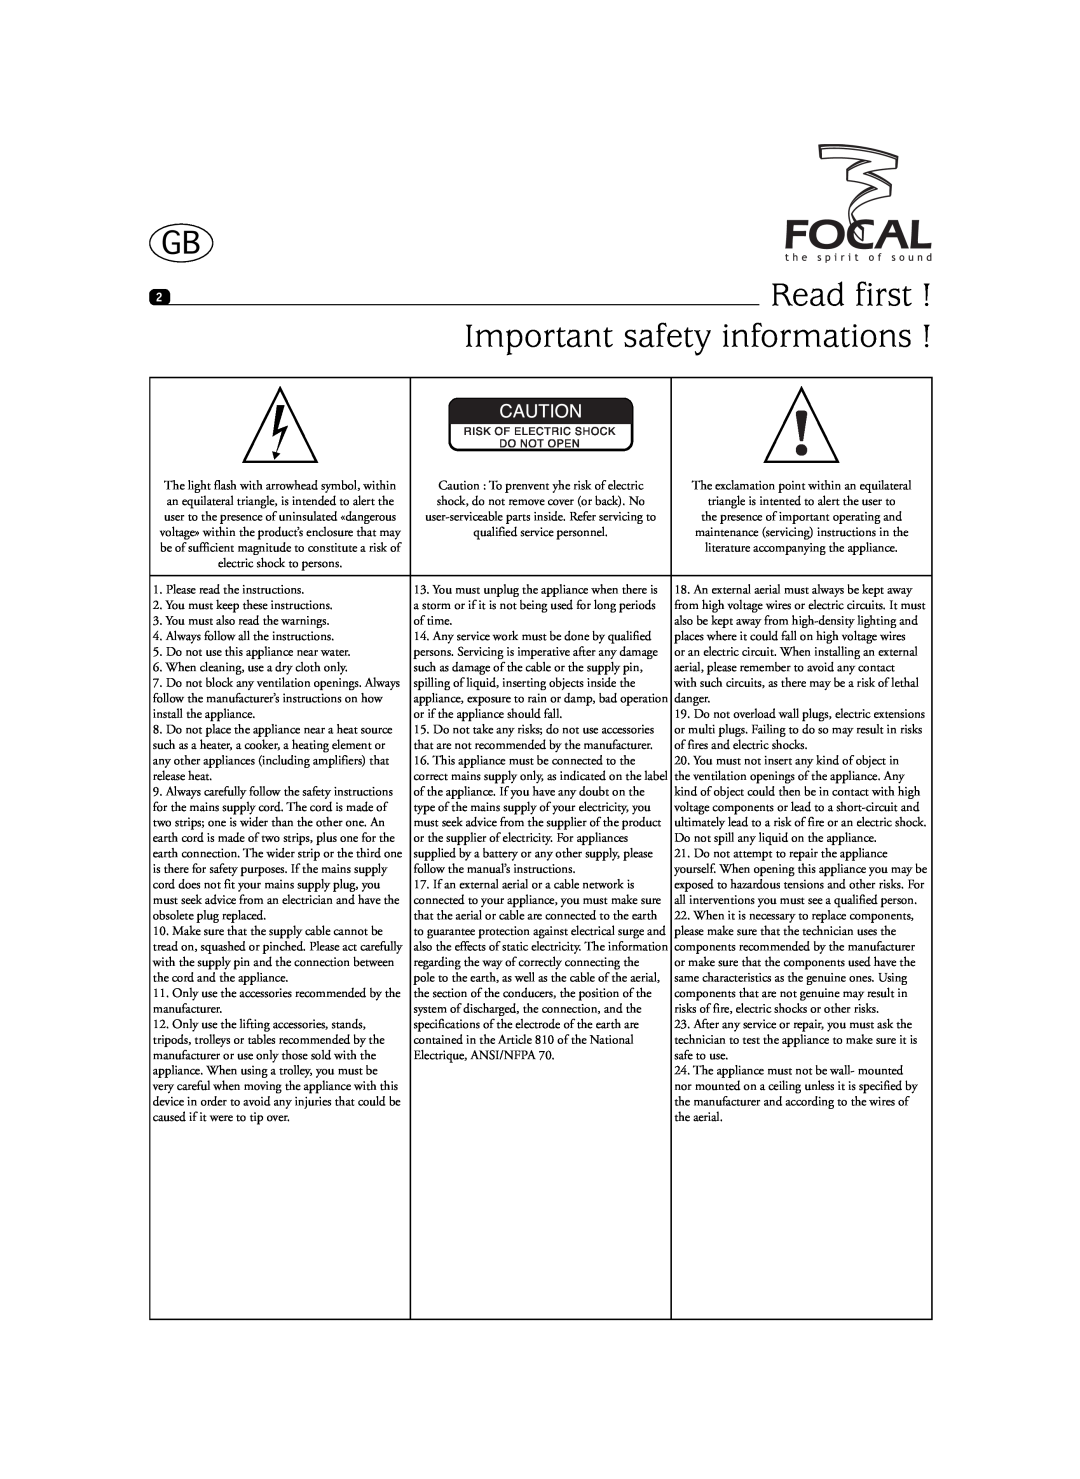 Focal Sib XL, SIB XXL user manual Read first, Important safety informations 